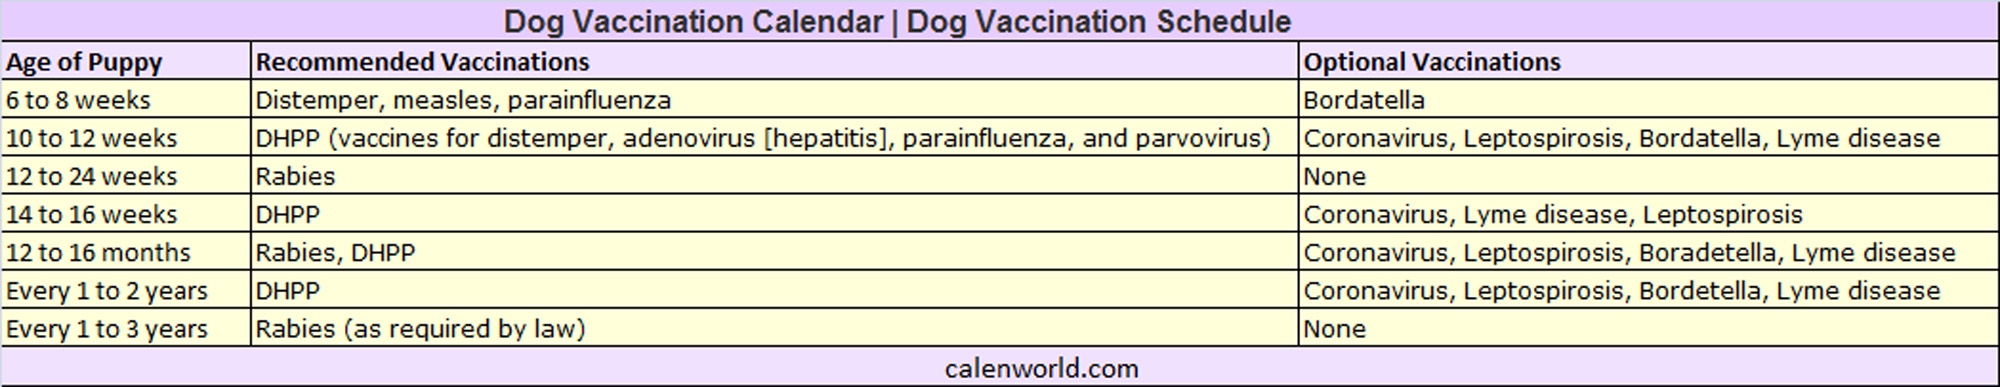 Dog Vaccination Calendar Dog Immunization Calendar